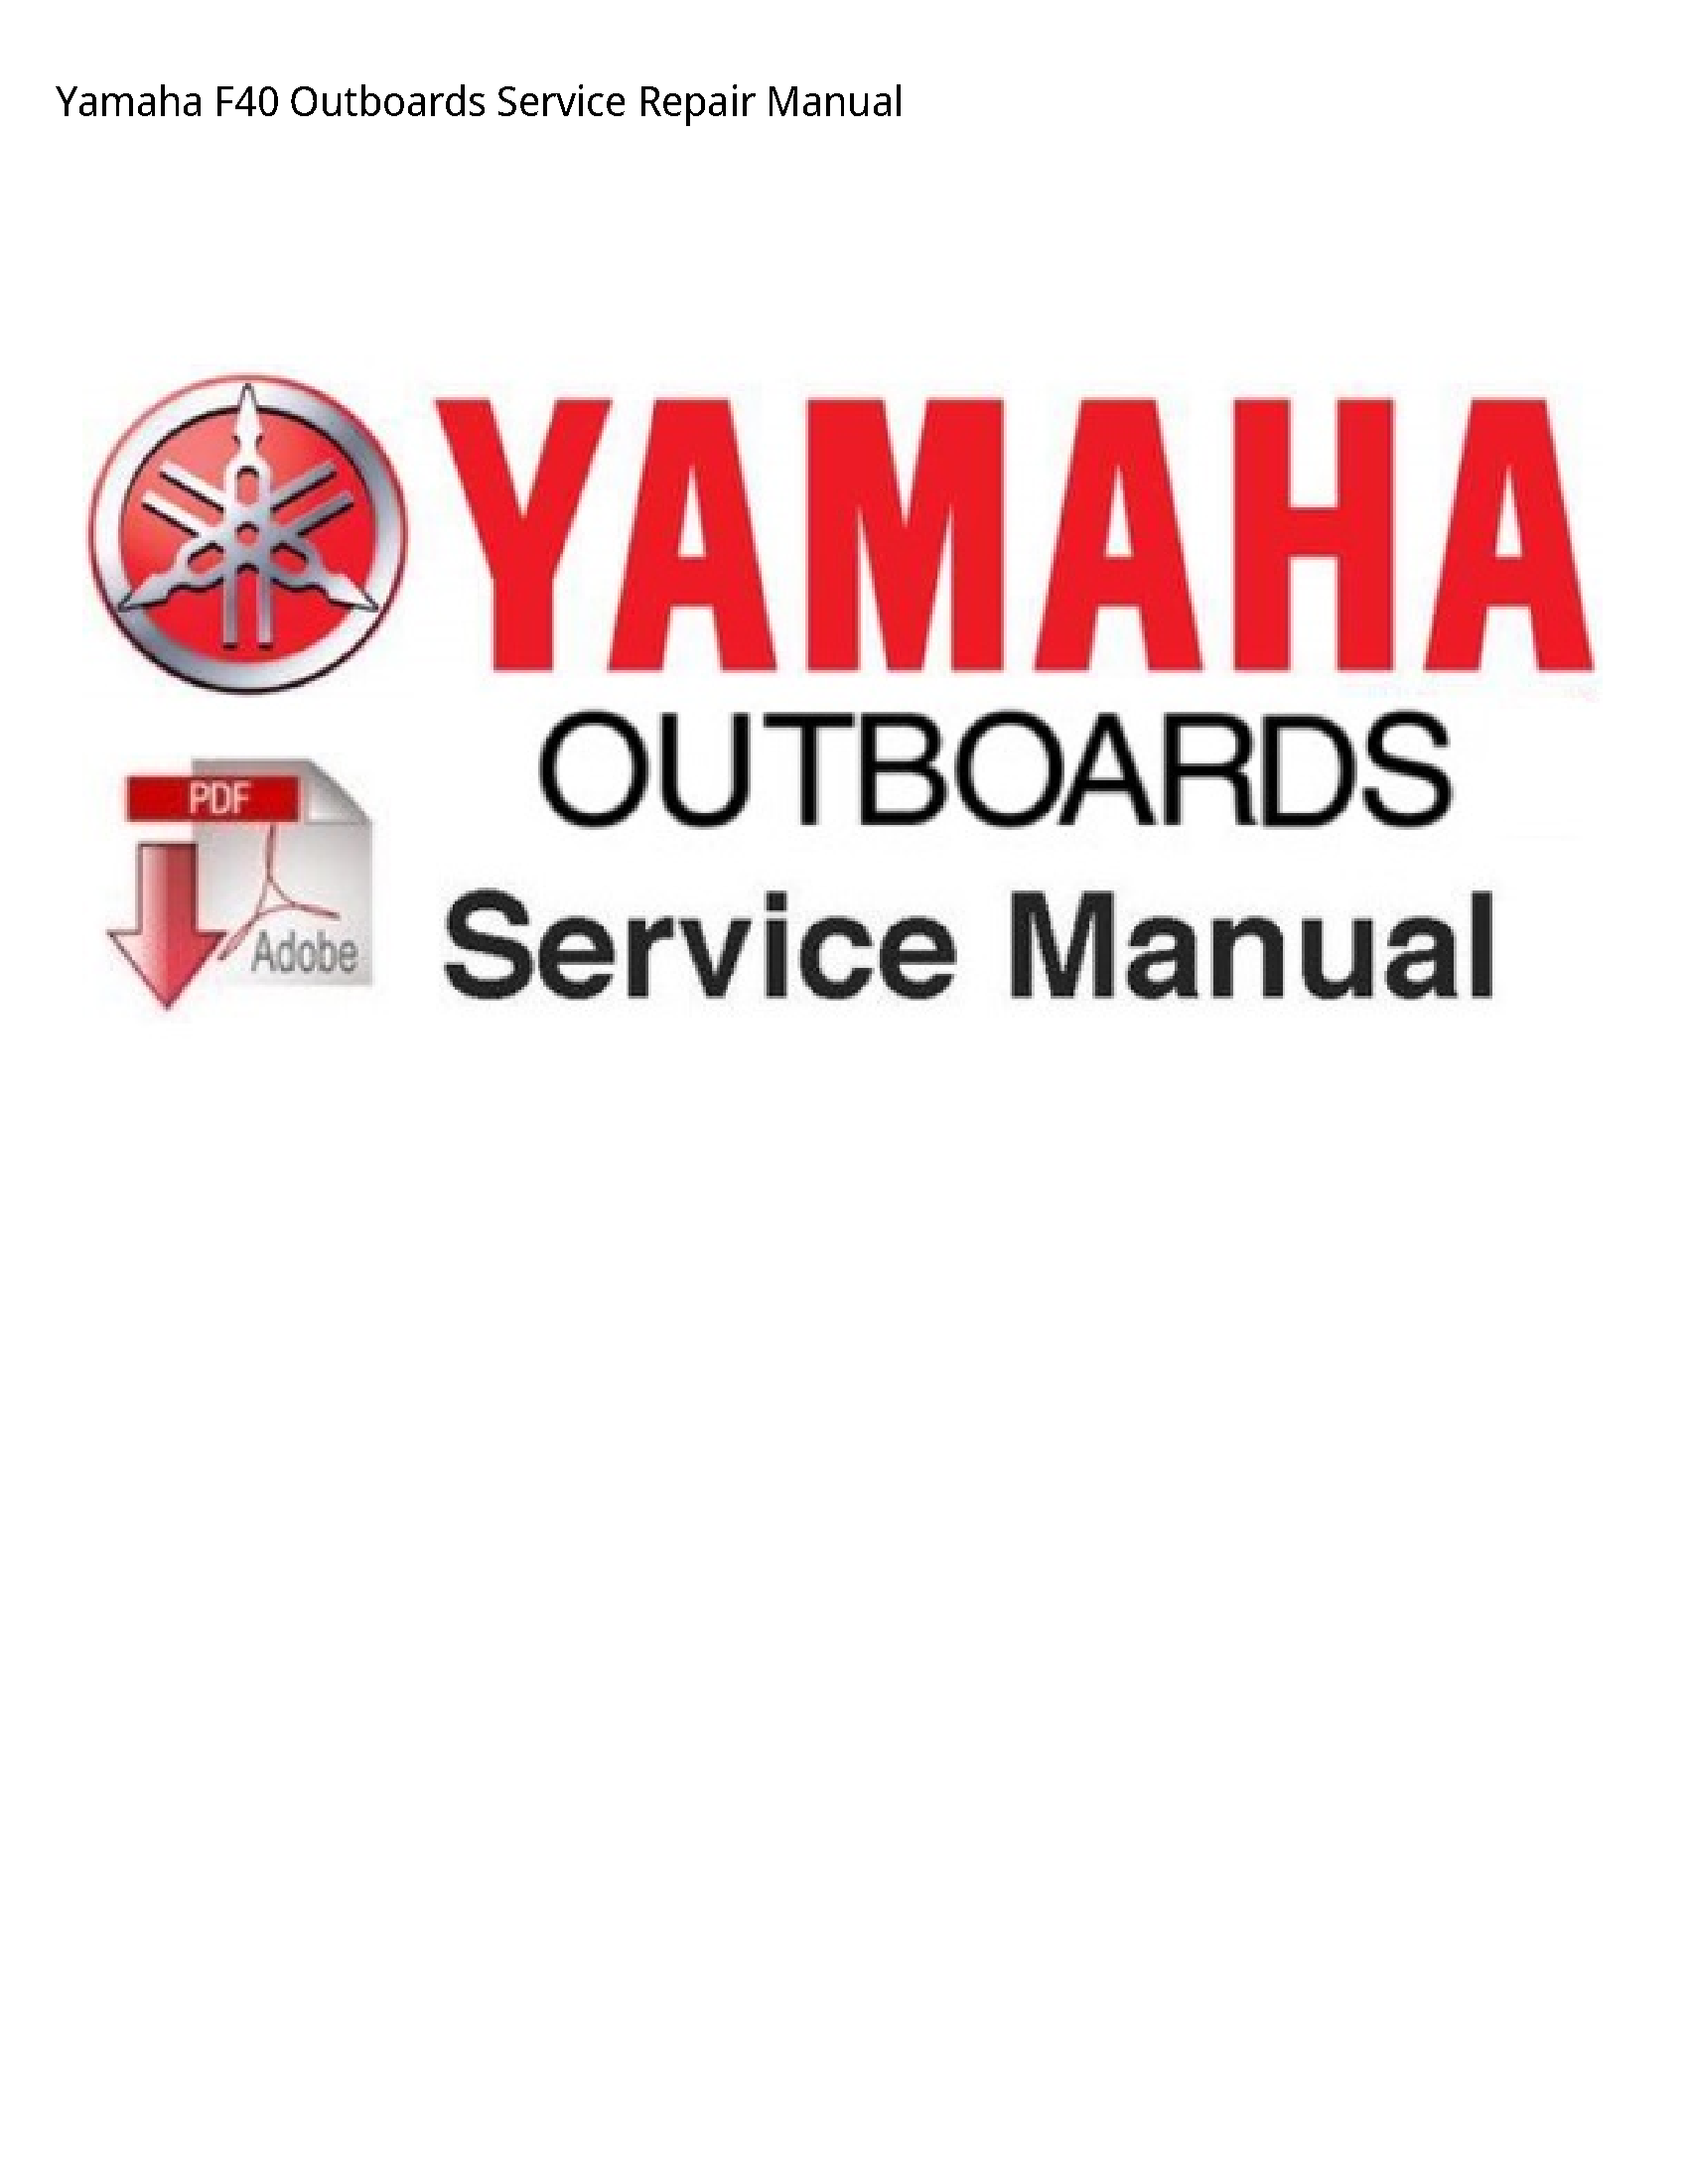 Yamaha F40 Outboards manual